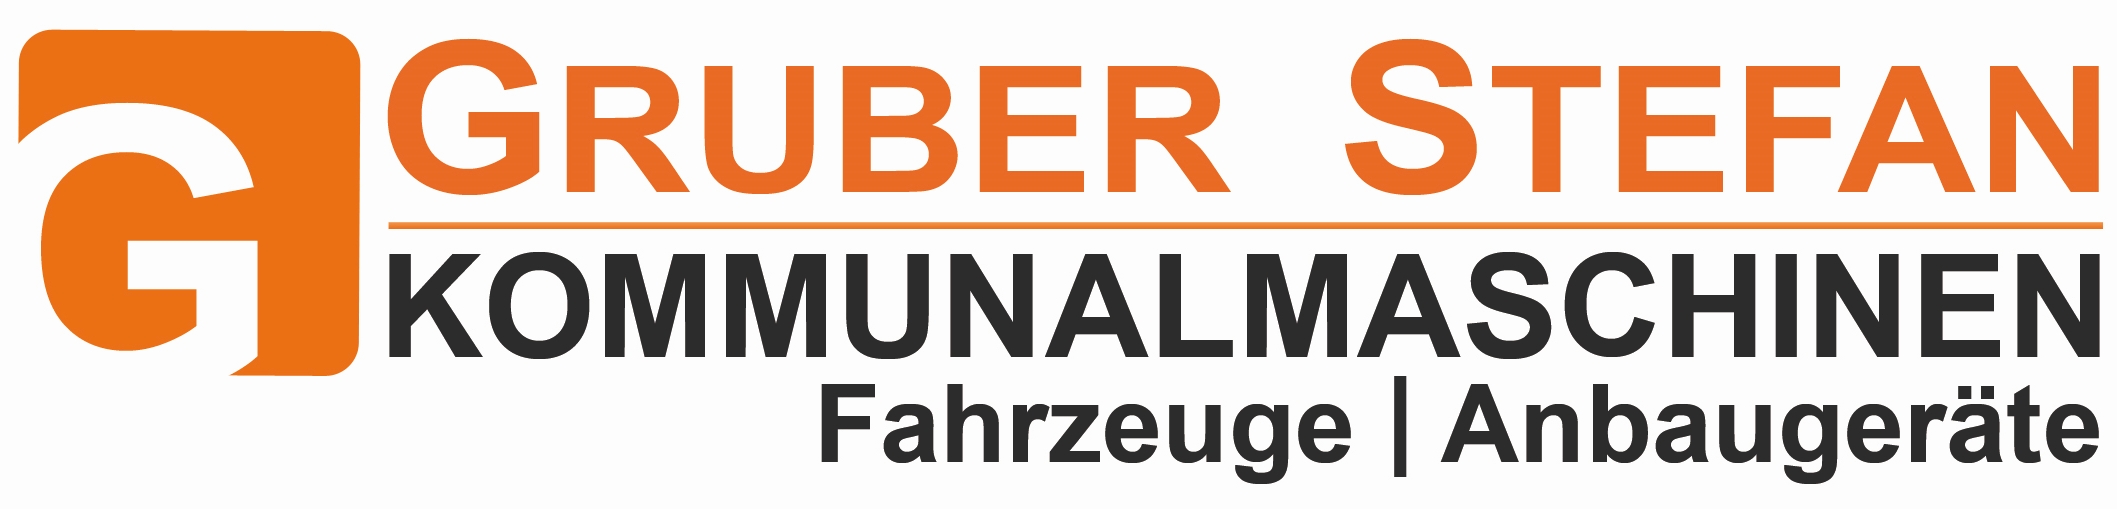 GRUBER Kommunalmaschinen logo